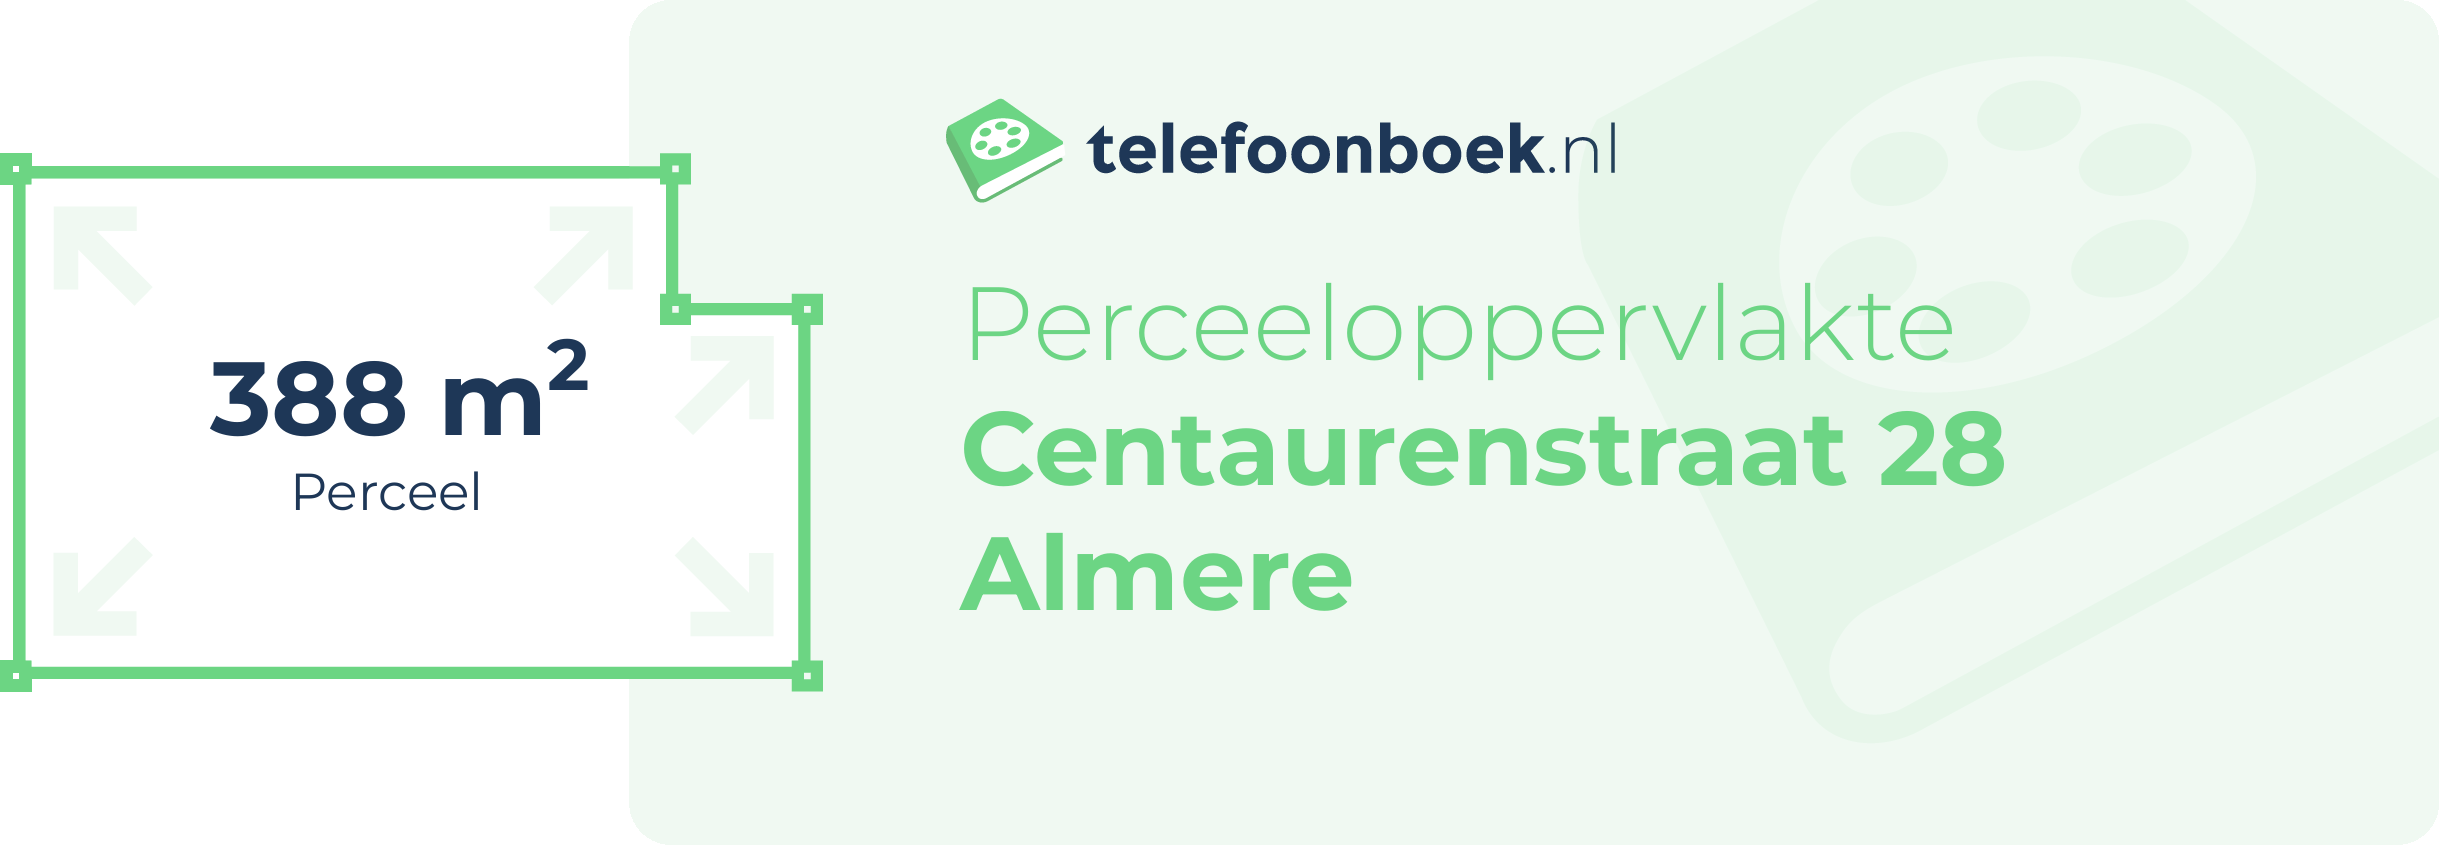 Perceeloppervlakte Centaurenstraat 28 Almere